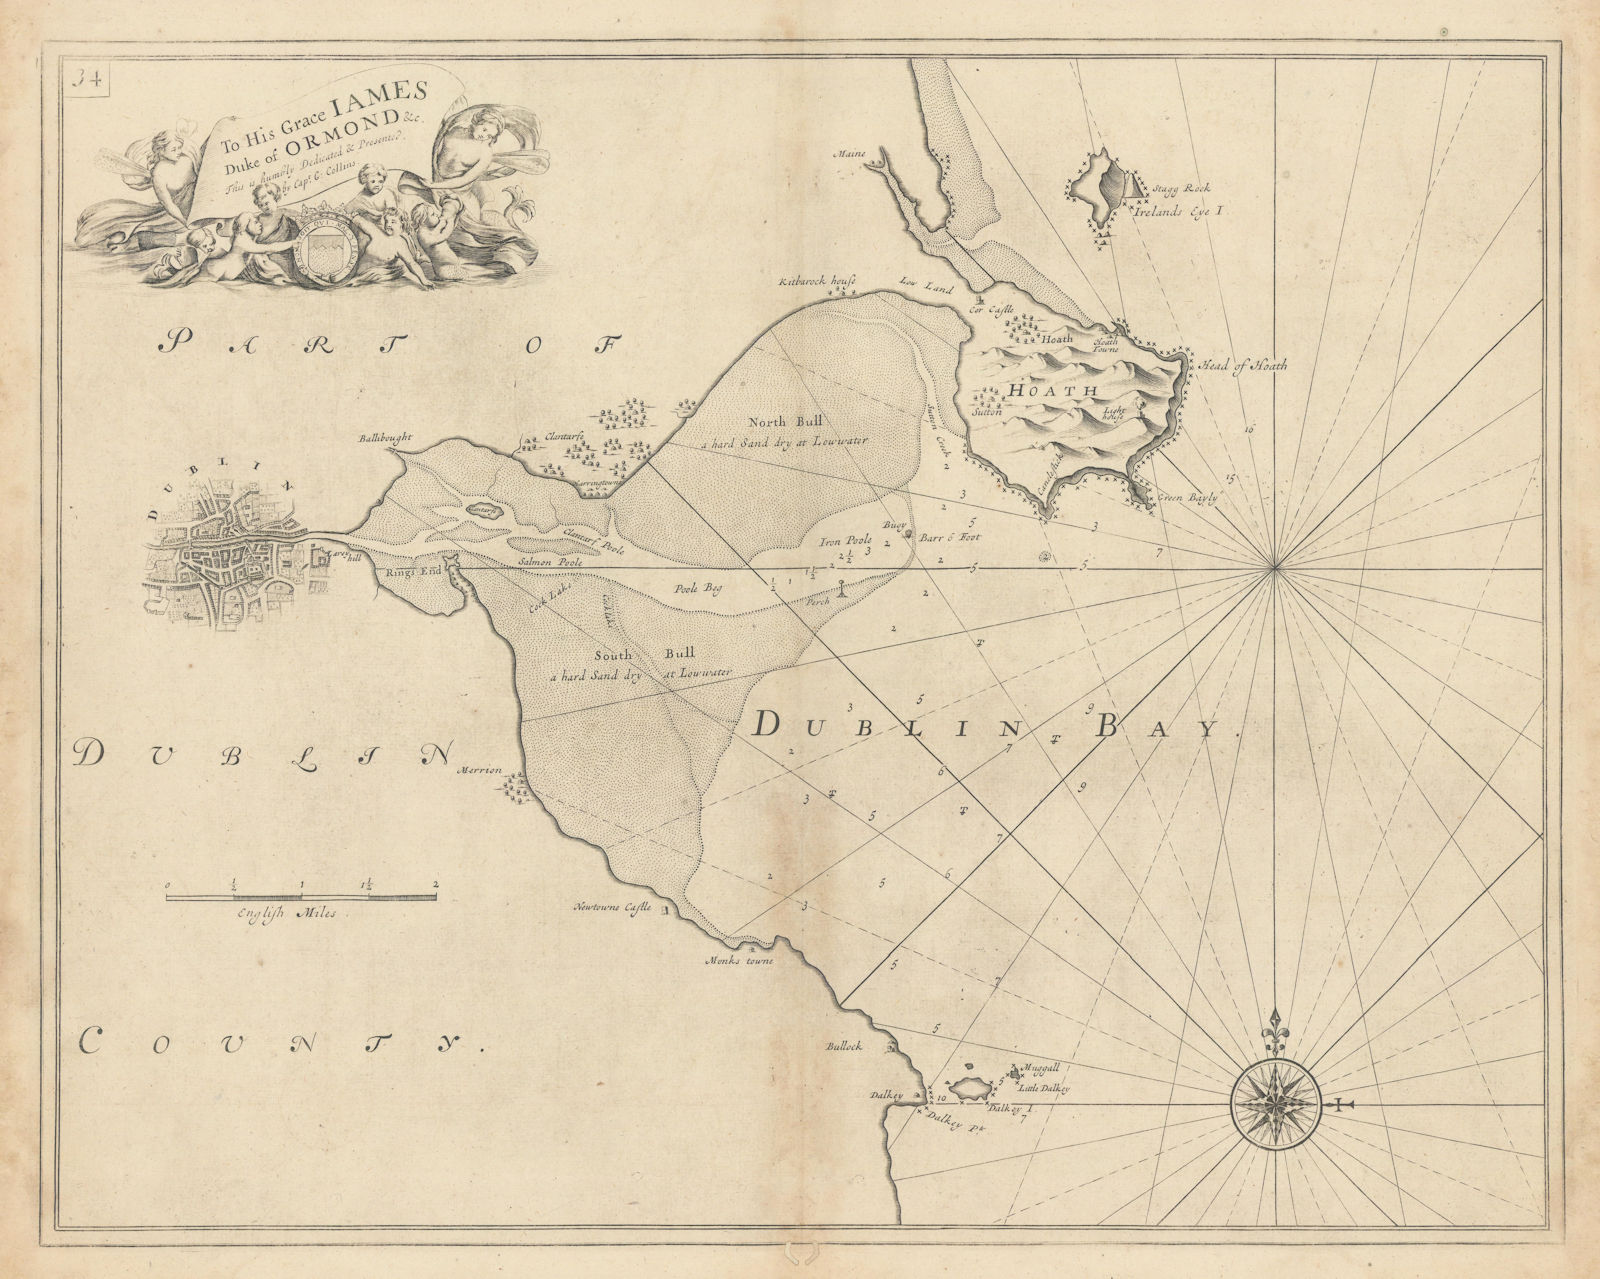 Associate Product DUBLIN BAY sea chart. Howth Head Dalkey Clontarf Merrion. COLLINS 1723 old map